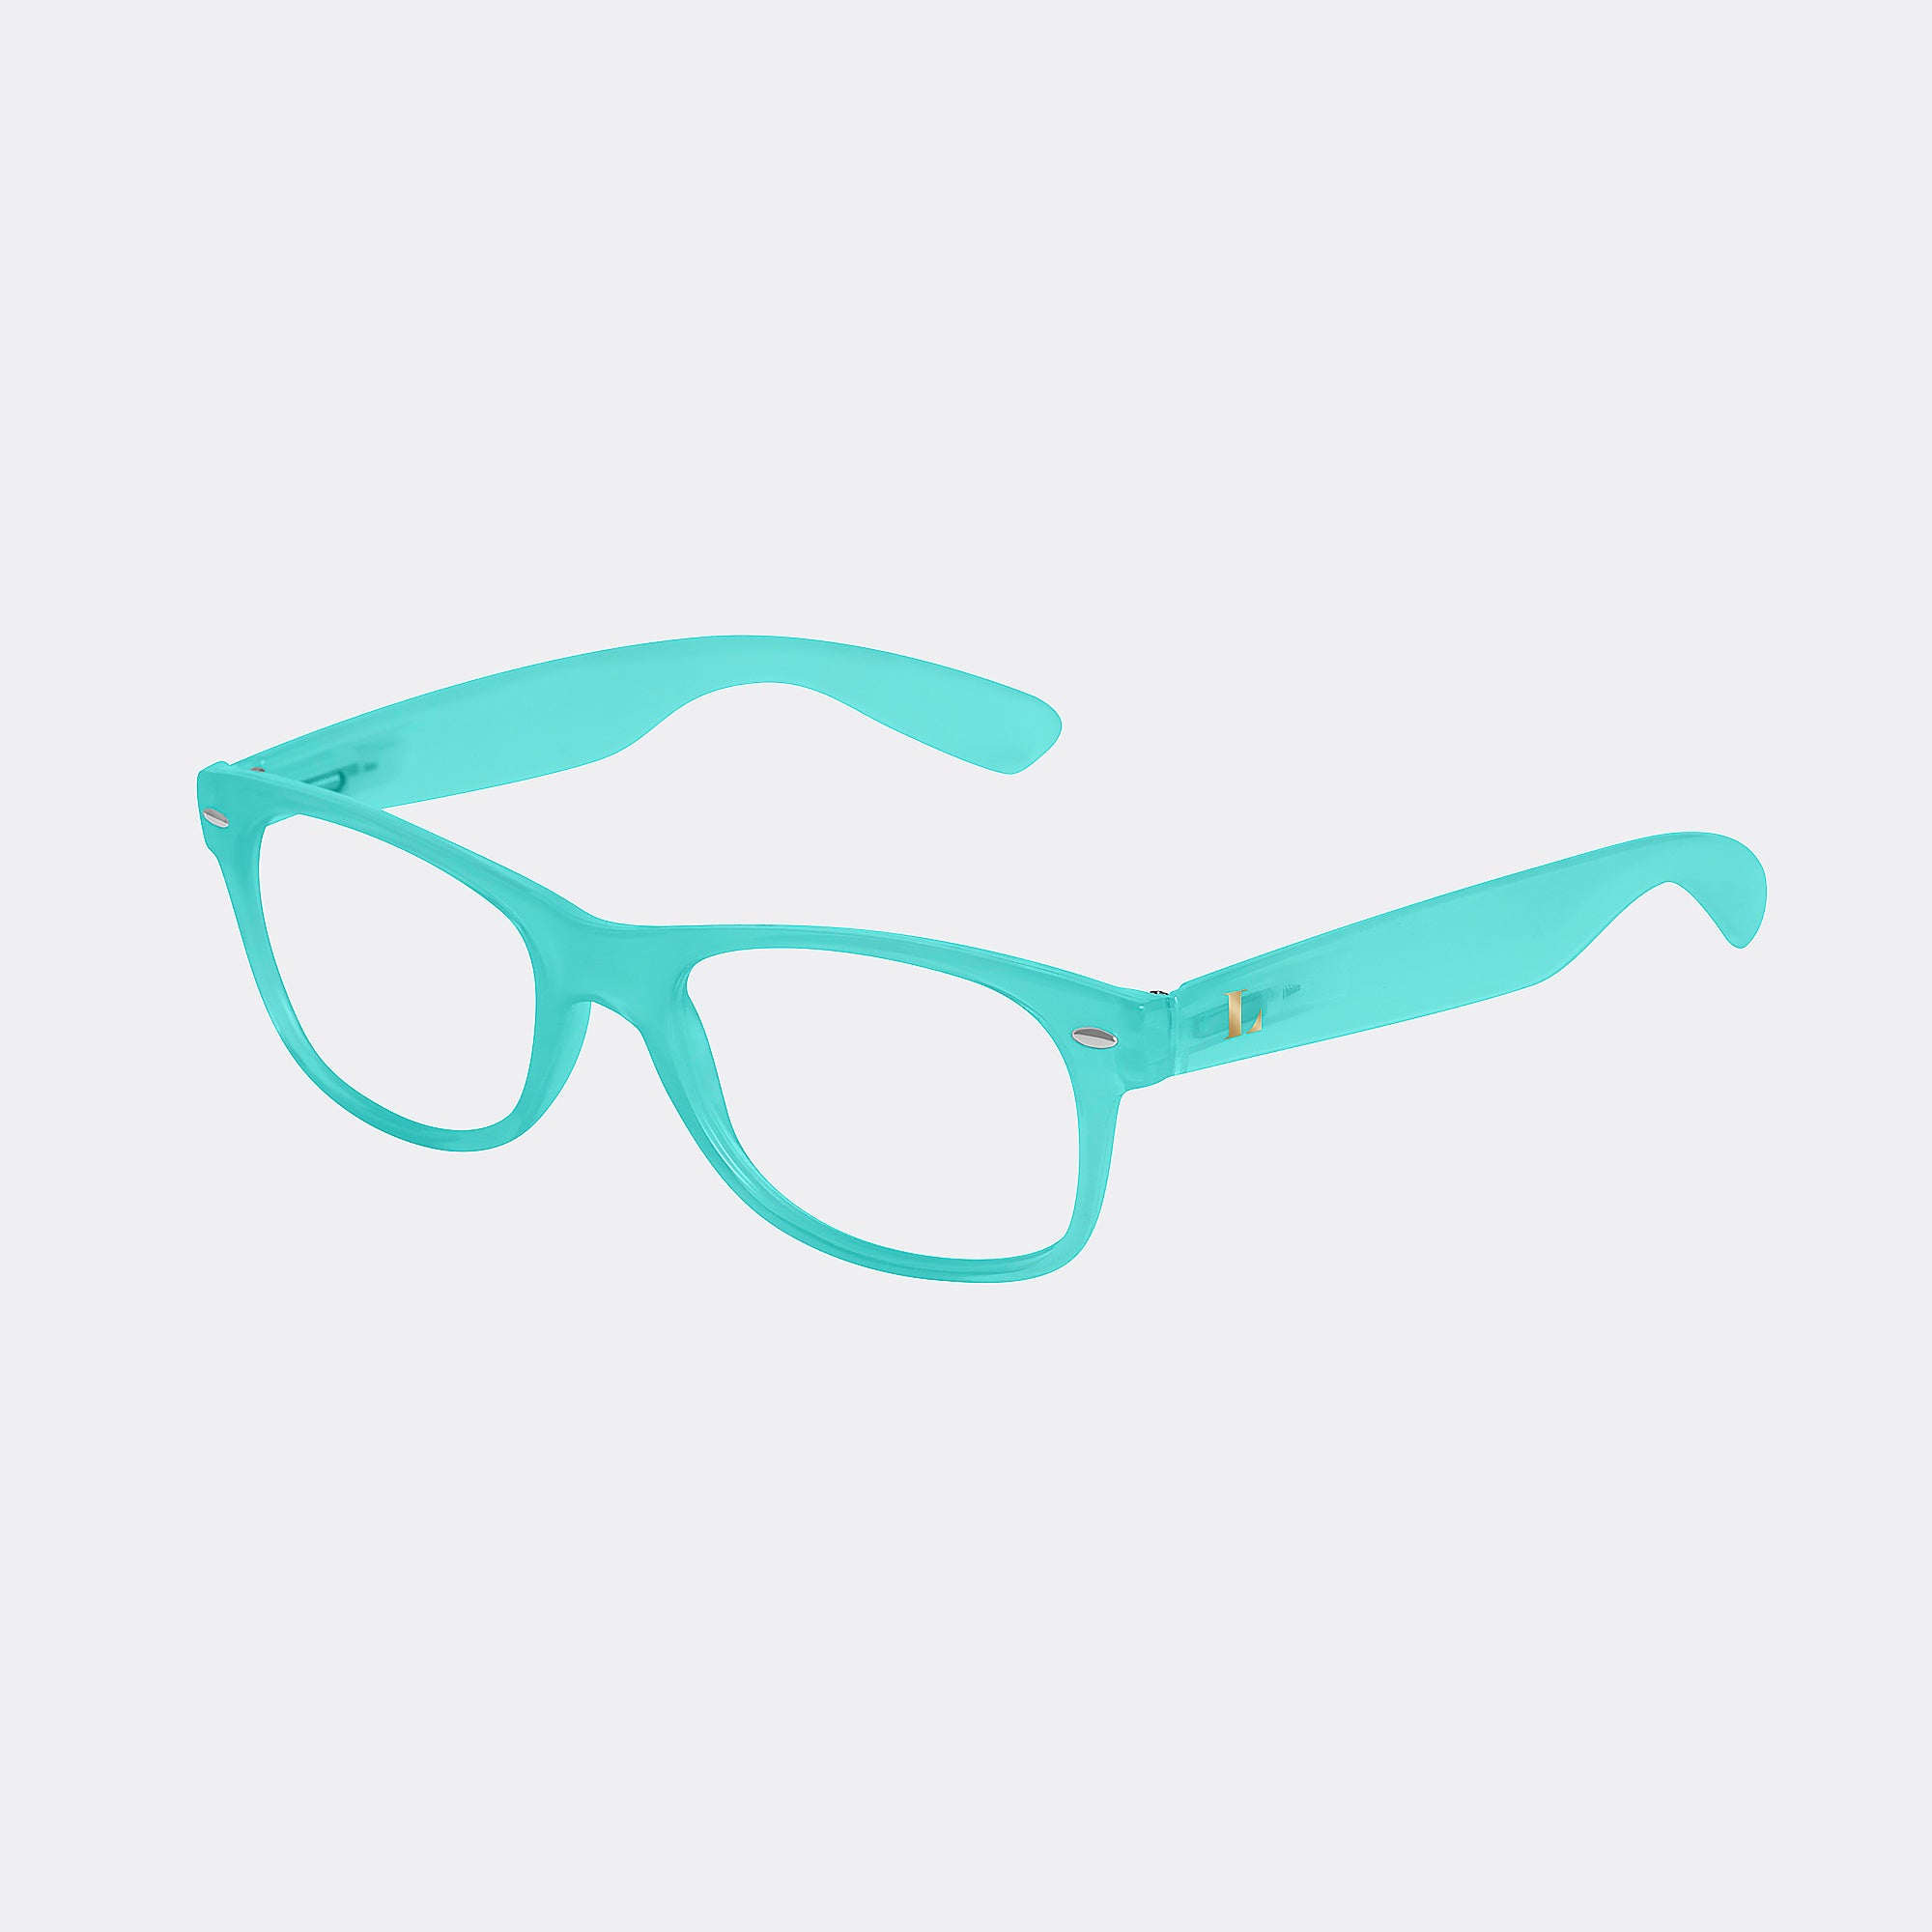 Big & Clear Magnifying Glasses -2x Magnification - Lashbox LA